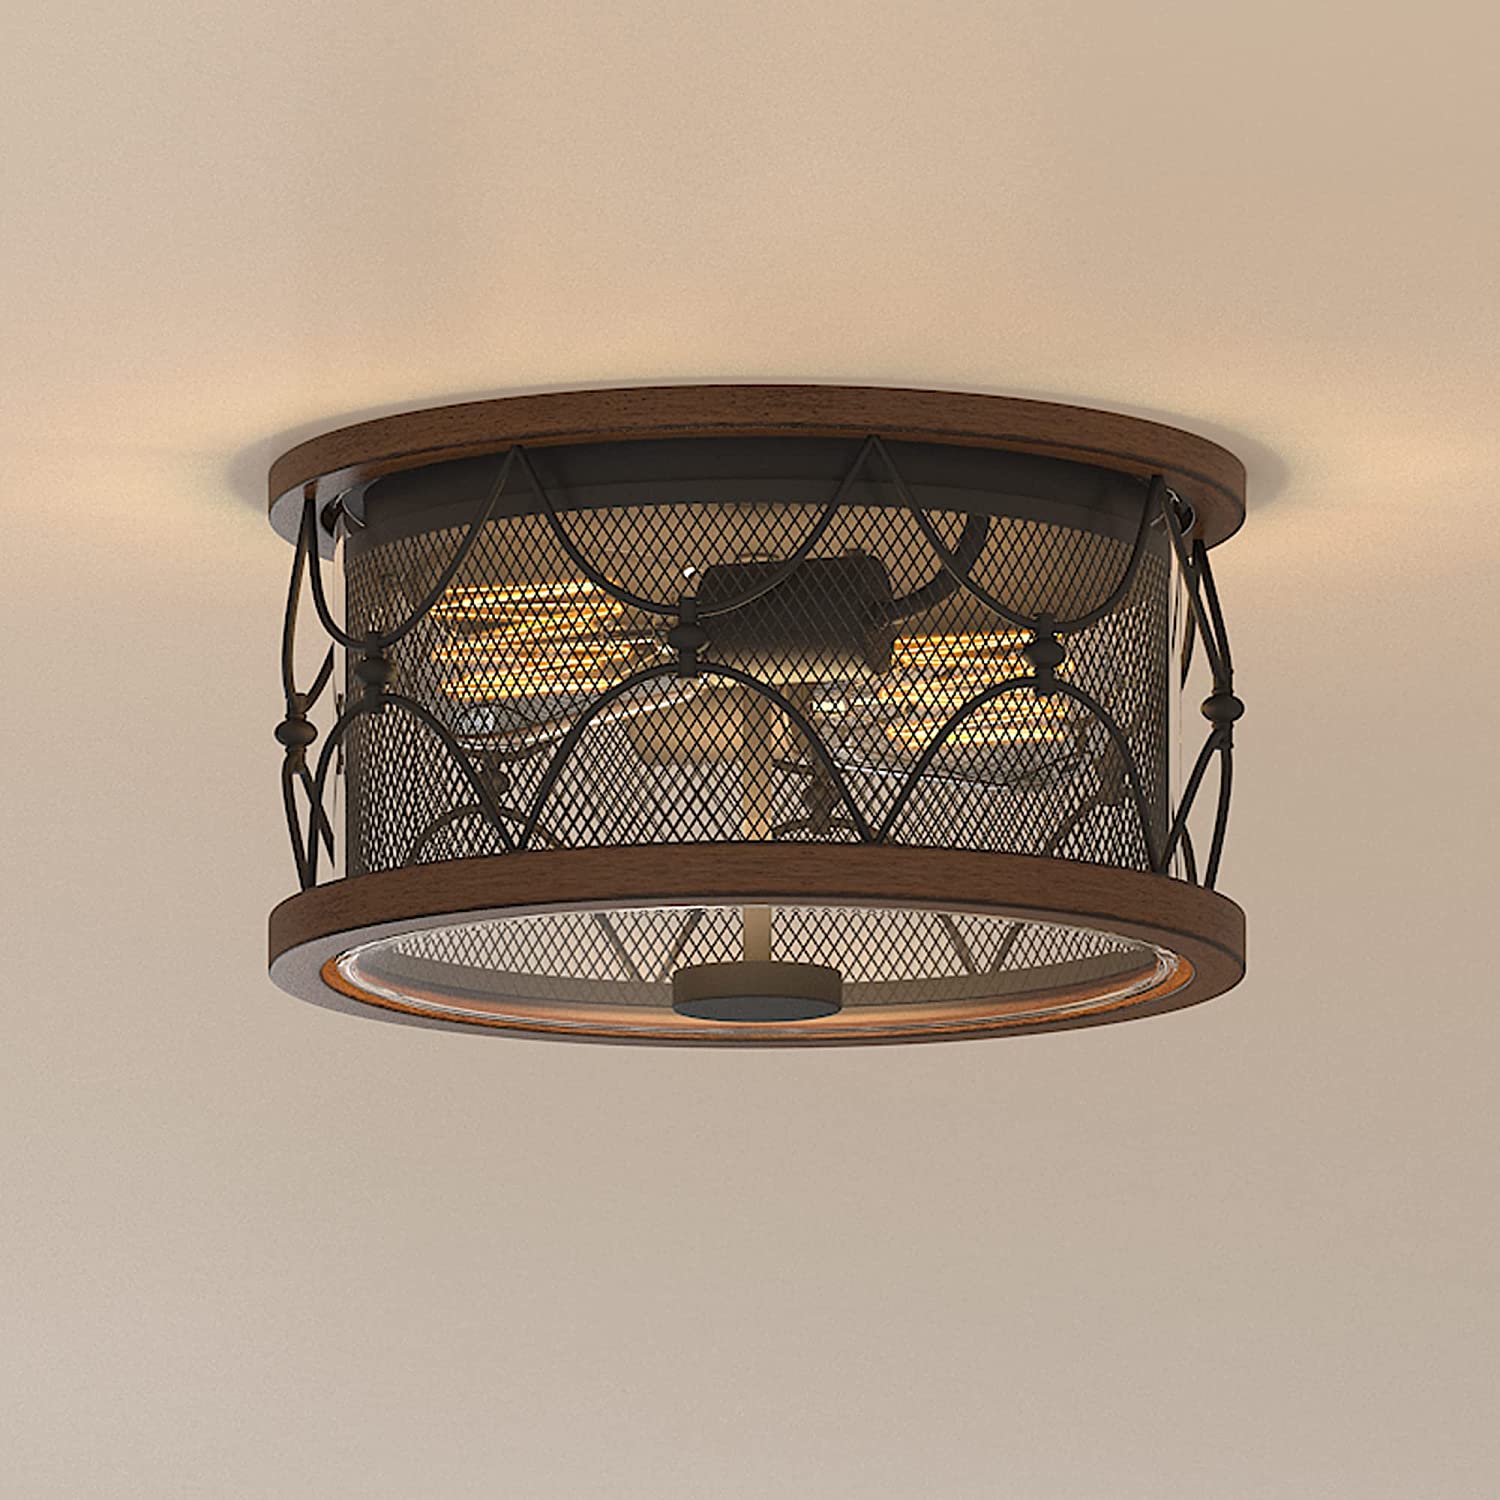 3 light semi flush mount ceiling light fixture farmhouse wood ceiling lamp